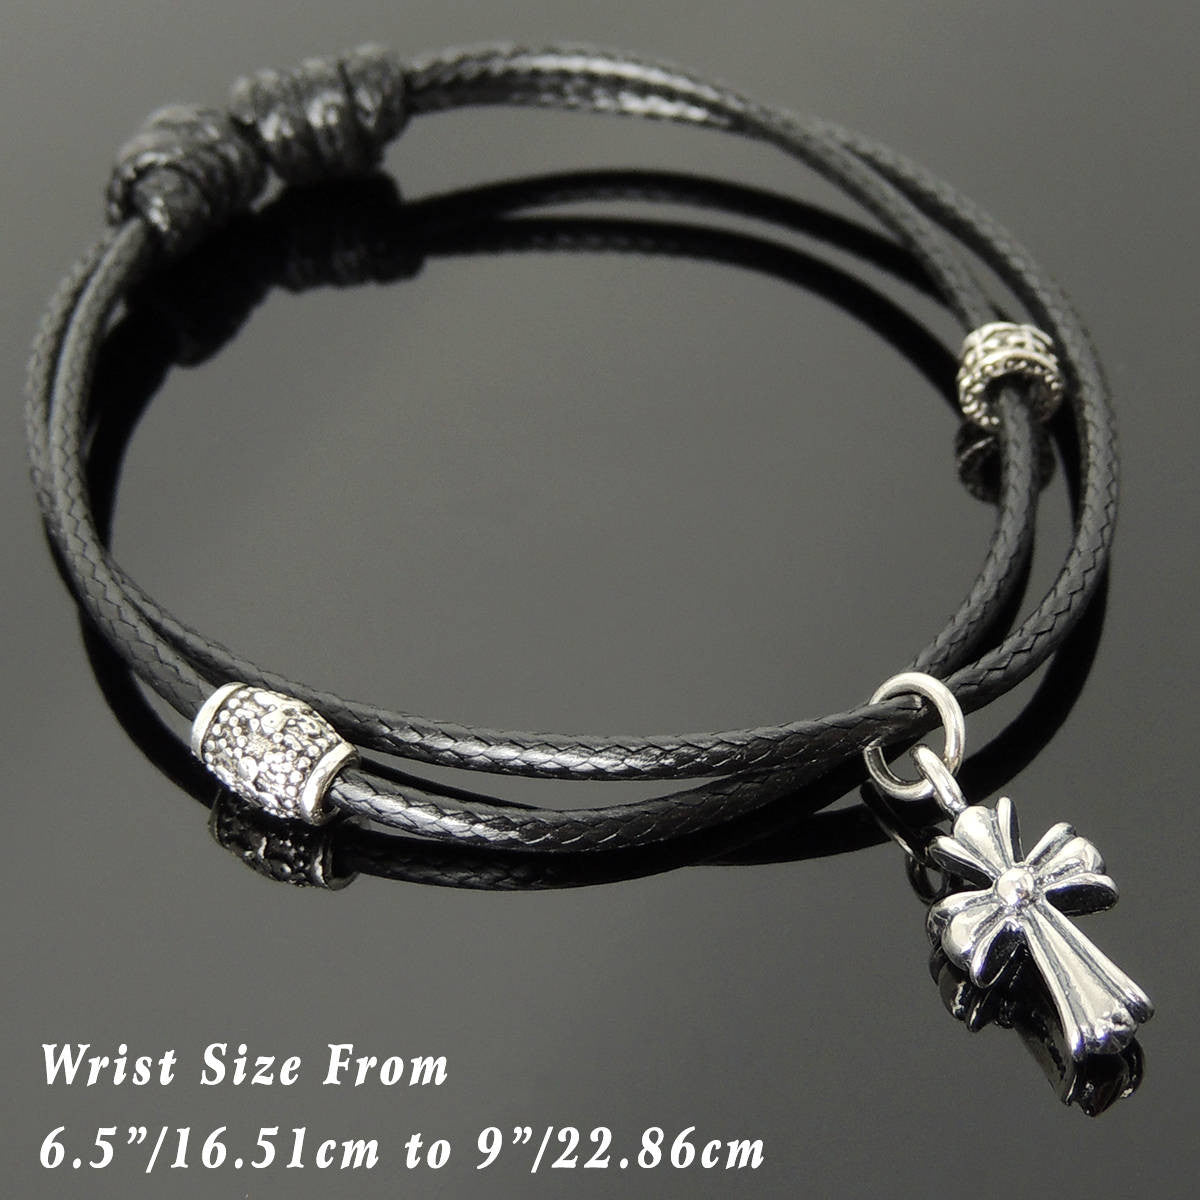 Adjustable Wax Rope Bracelet with S925 Sterling Silver Vintage Cross Pendant & Barrel Spacer Beads - Handmade by Gem & Silver BR1118